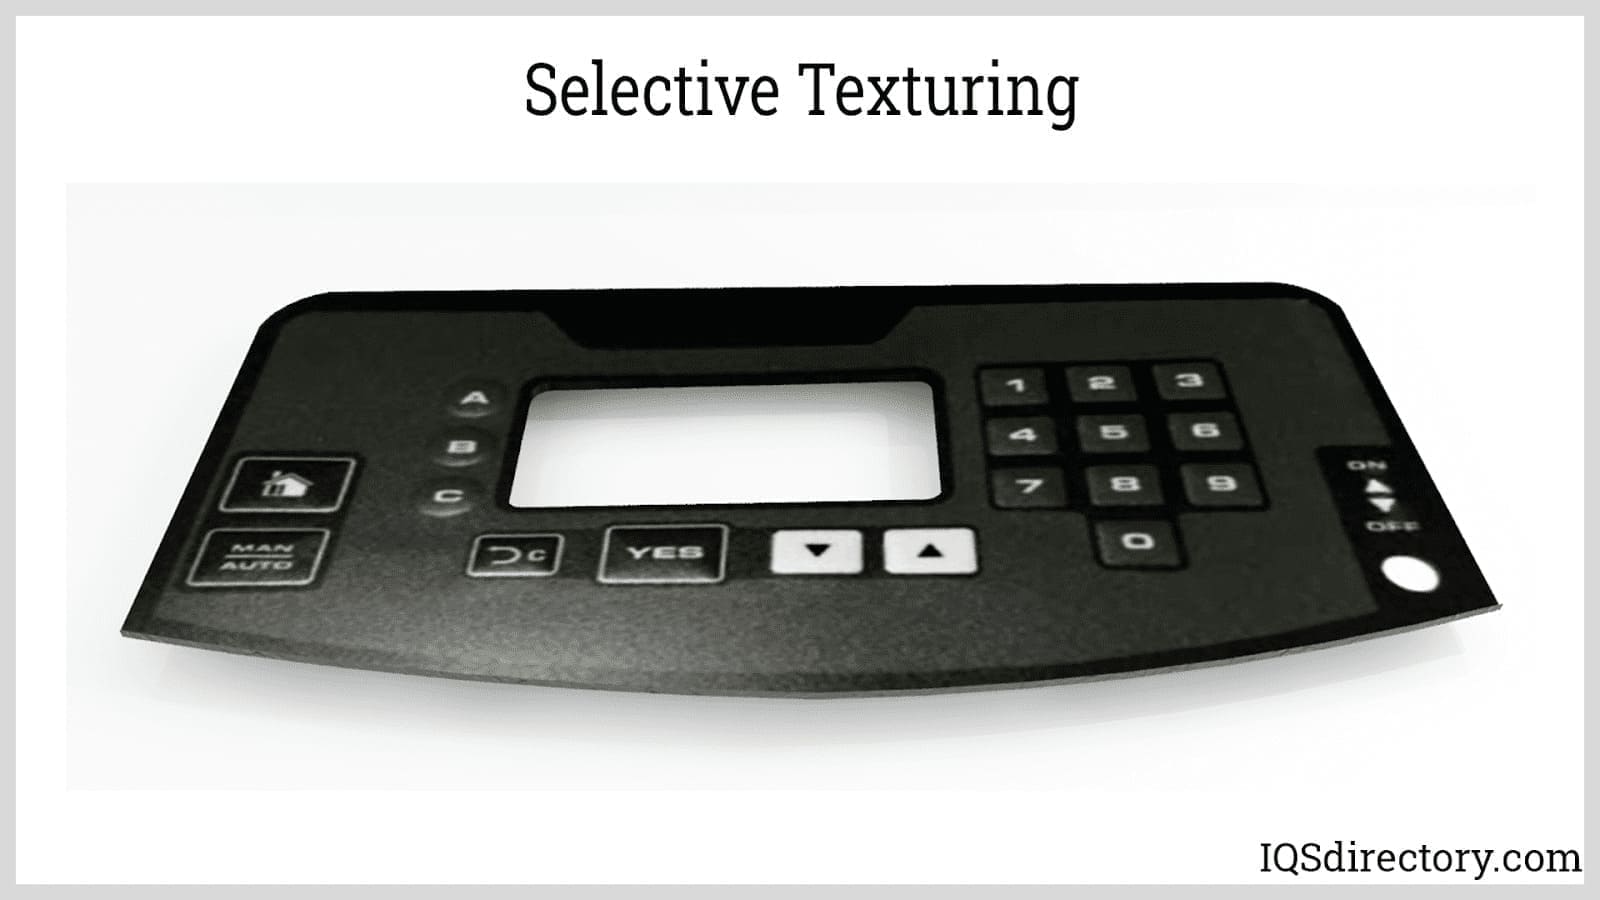 Selective Texturing